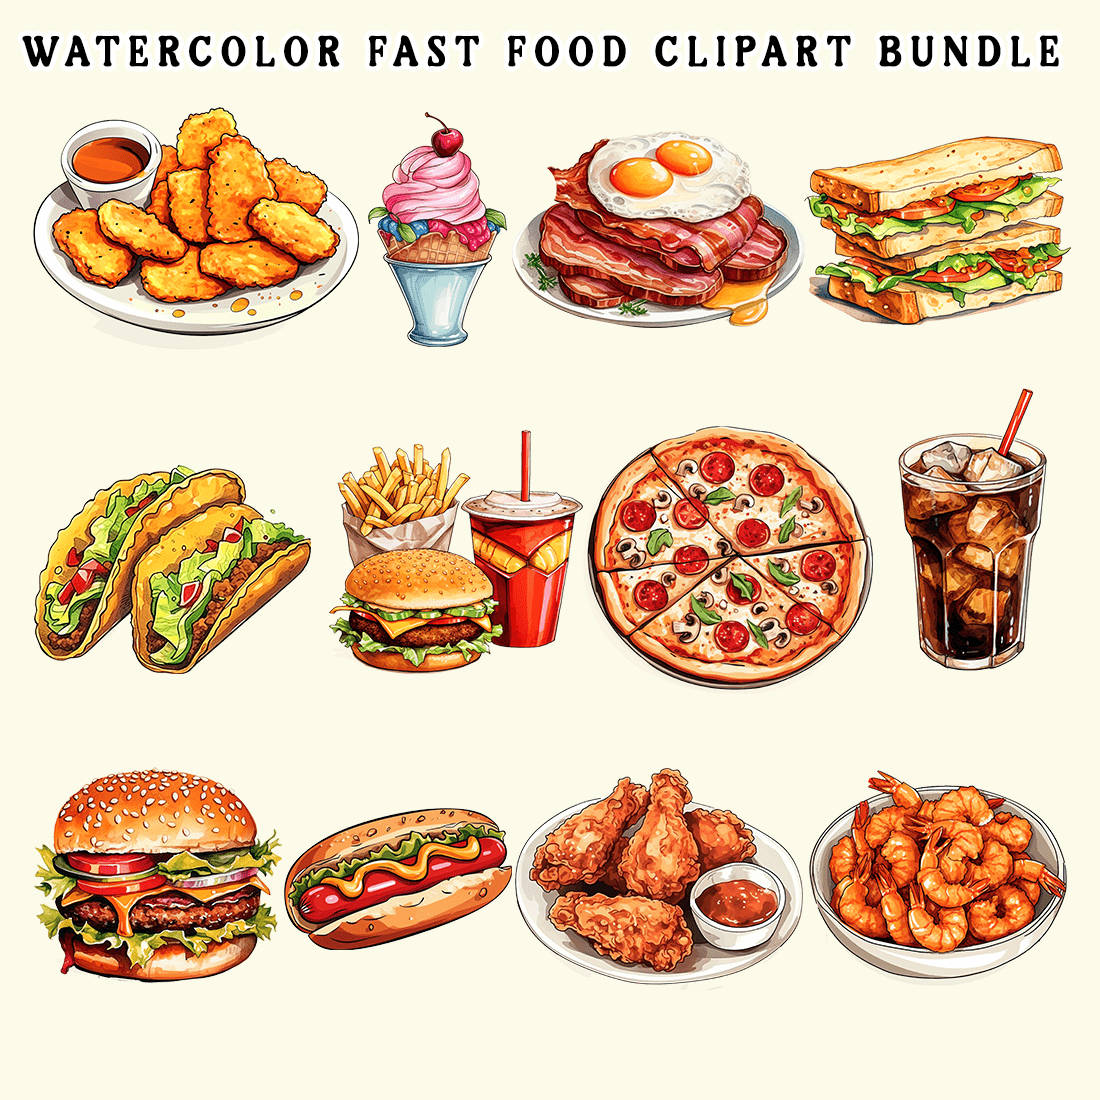 Watercolor Fast Food Clipart Bundle preview image.